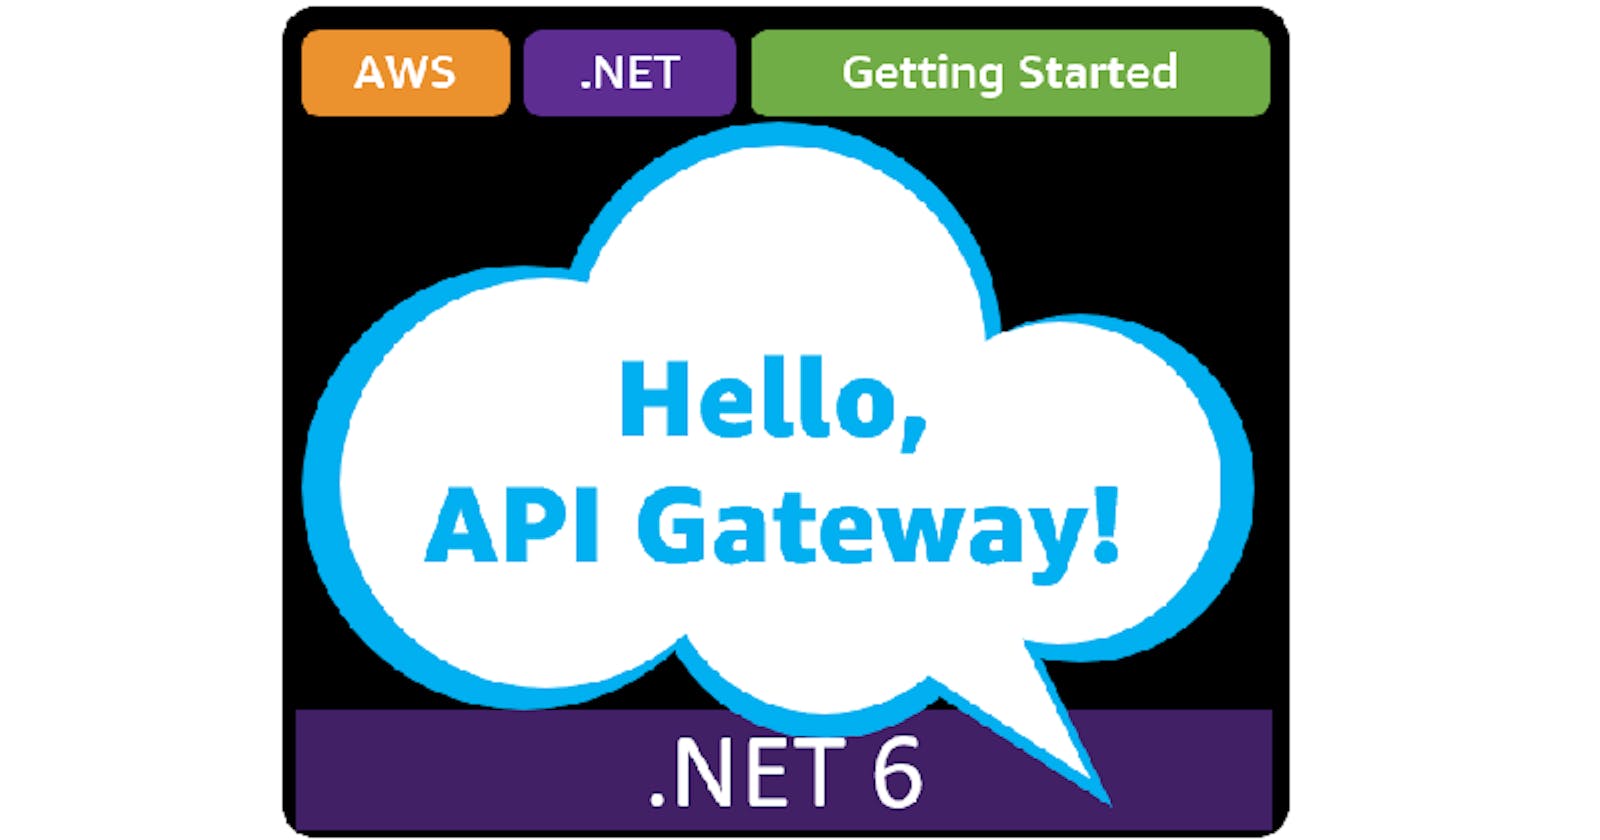 Hello, API Gateway!